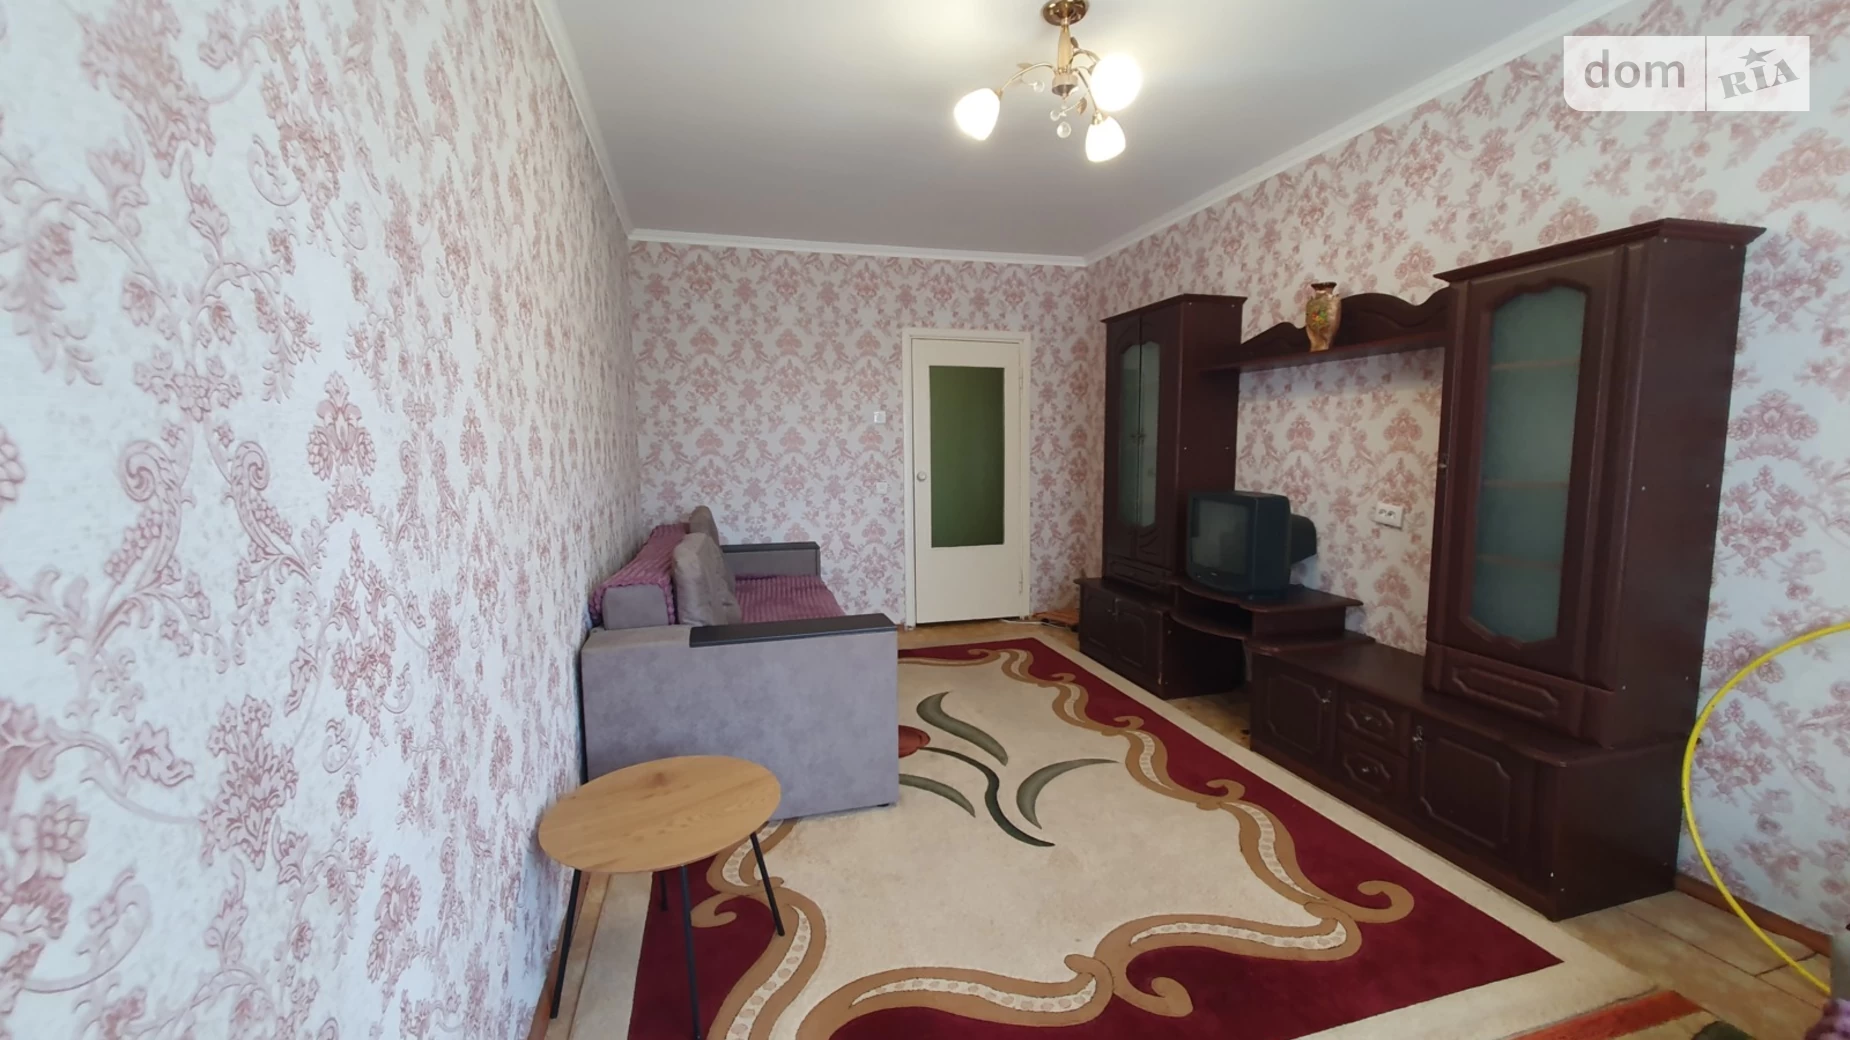 Продається 1-кімнатна квартира 40 кв. м у Хмельницькому, вул. Панаса Мирного - фото 3